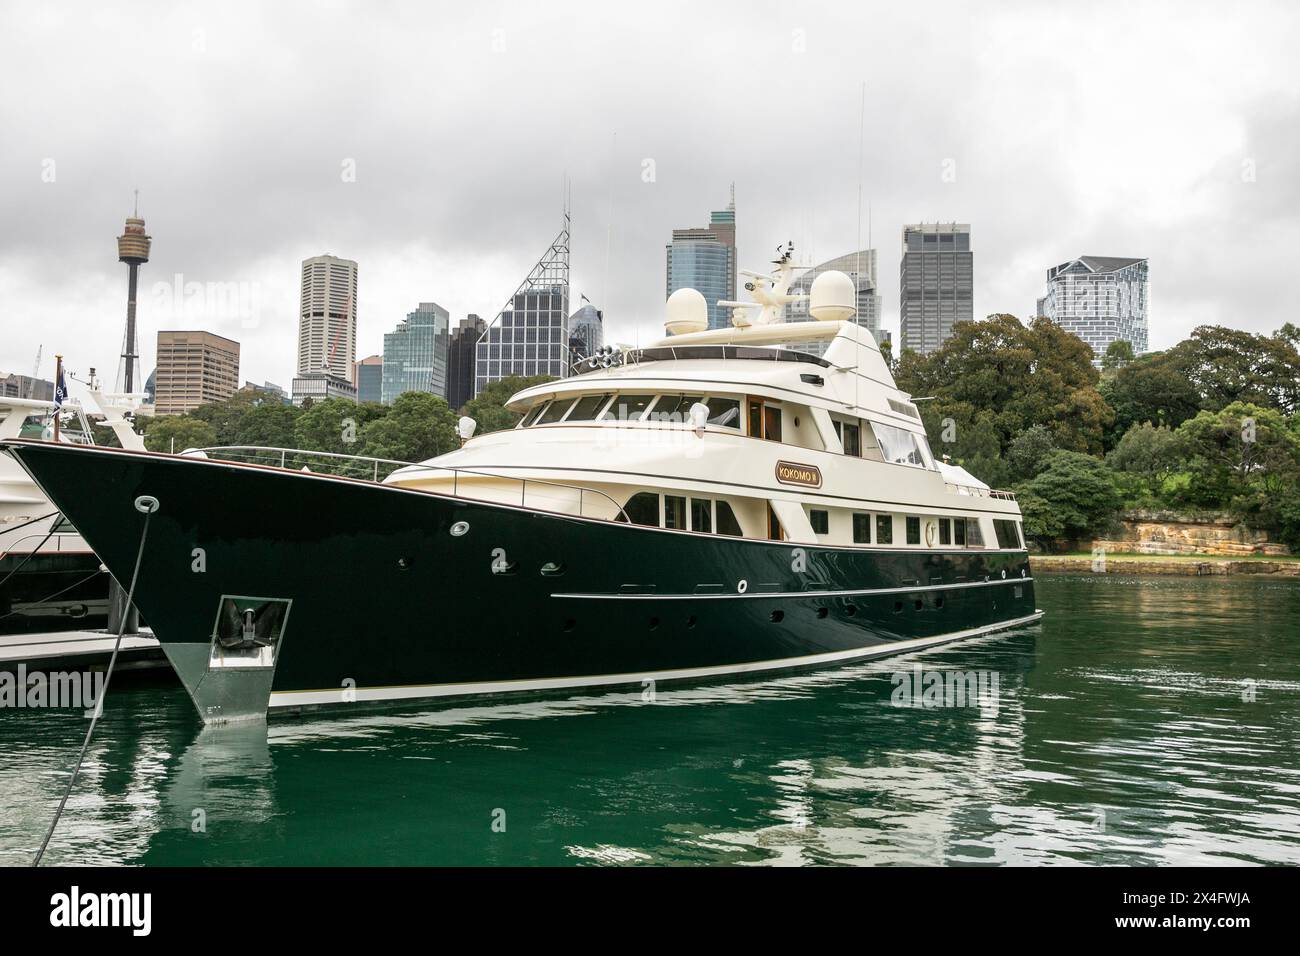 Kokomo II luxury motor yacht owned by the late Lang Walker, moored berthed at Woolloomooloo wharf in Sydney,NSW,Australia Stock Photo